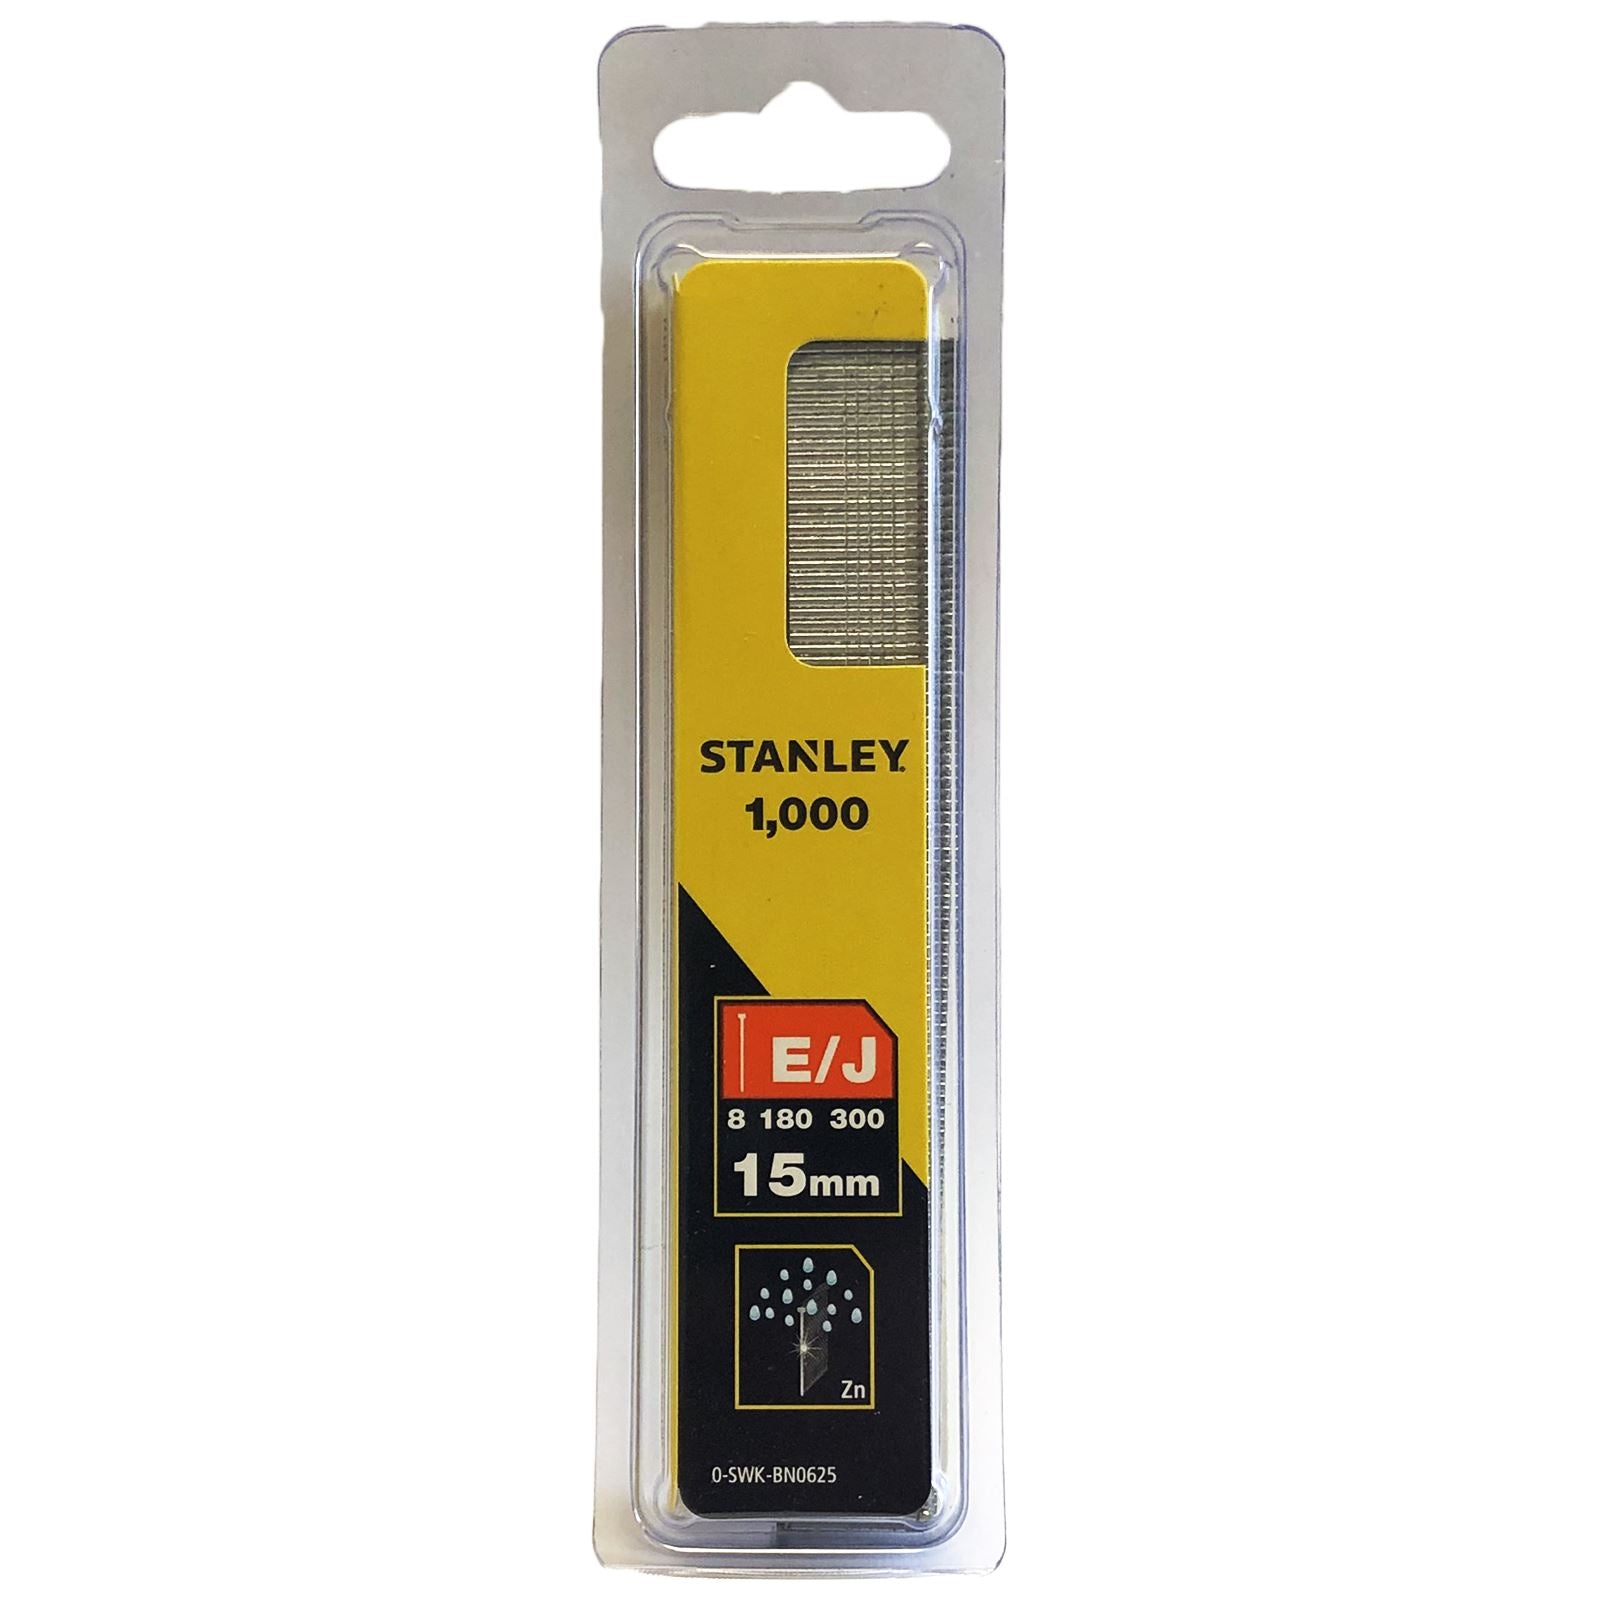 Stanley 1000 Piece Brad Nails 15mm